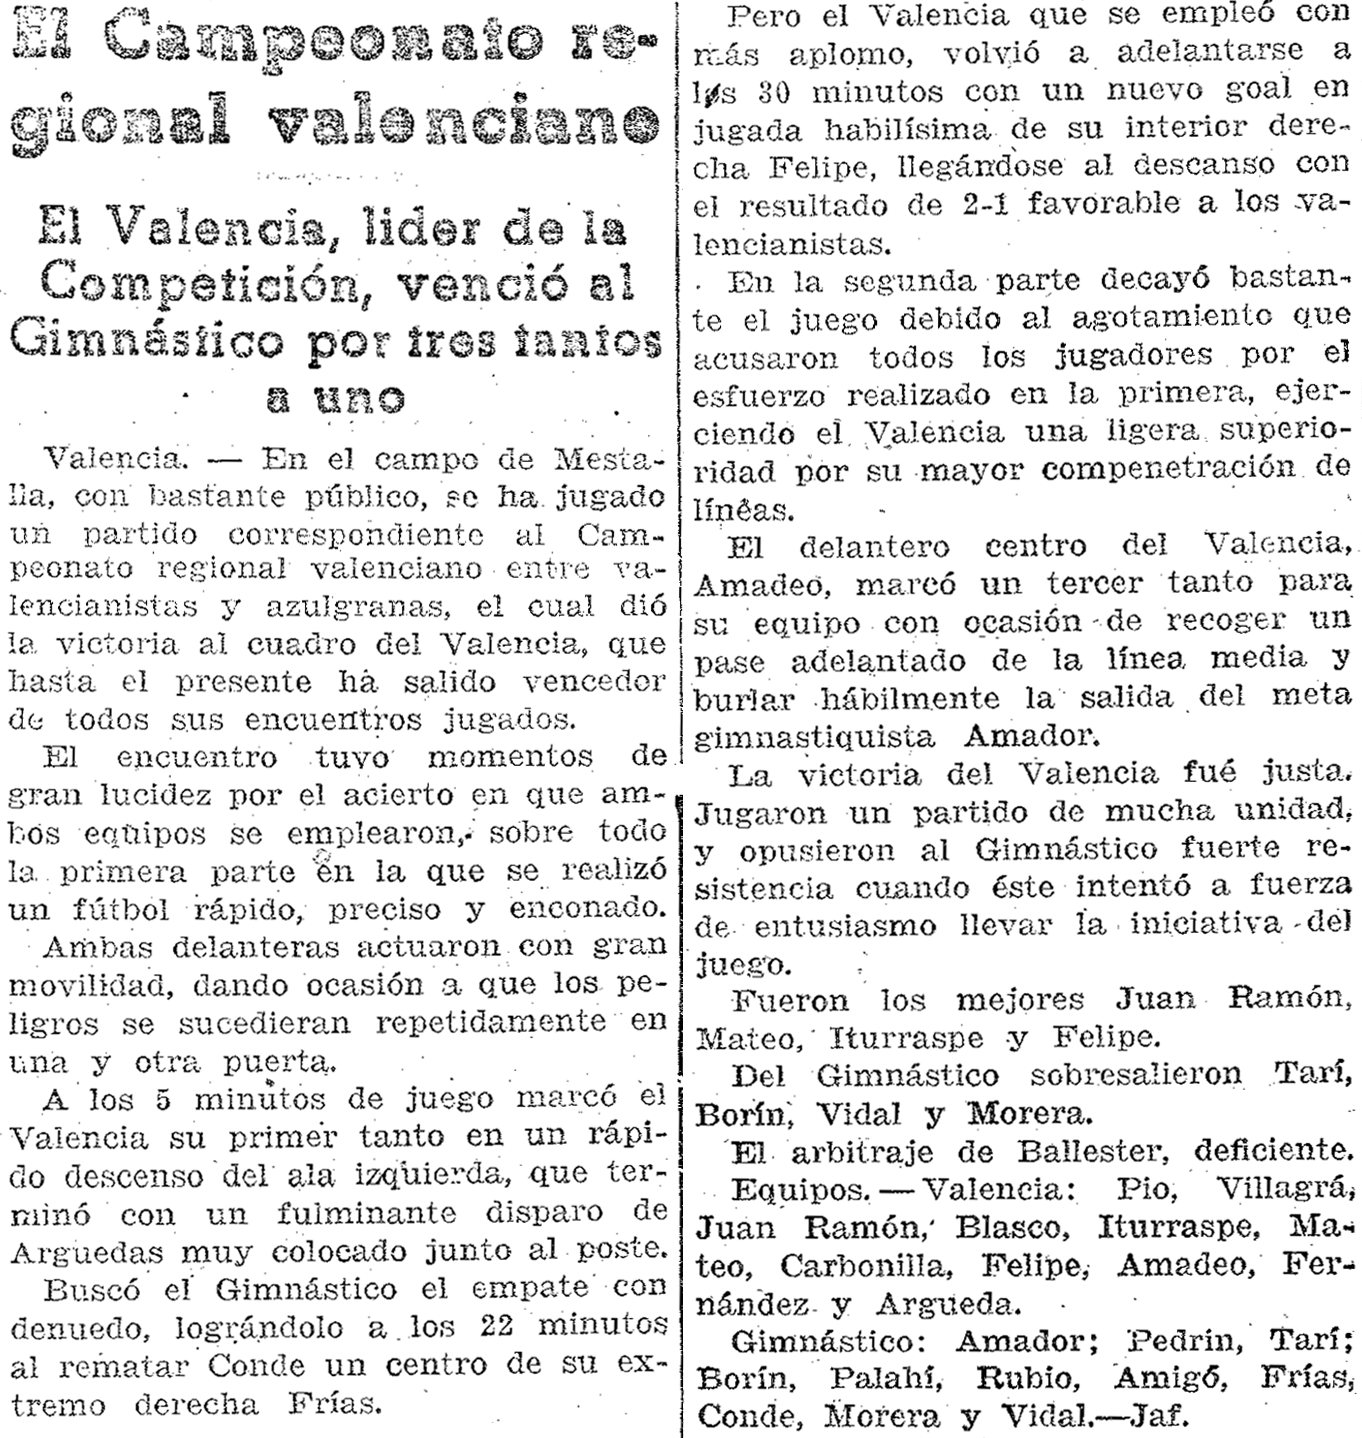 1937.11.21 (21 ноября 1937), Валенсия - Гимнастико, 3-1.png